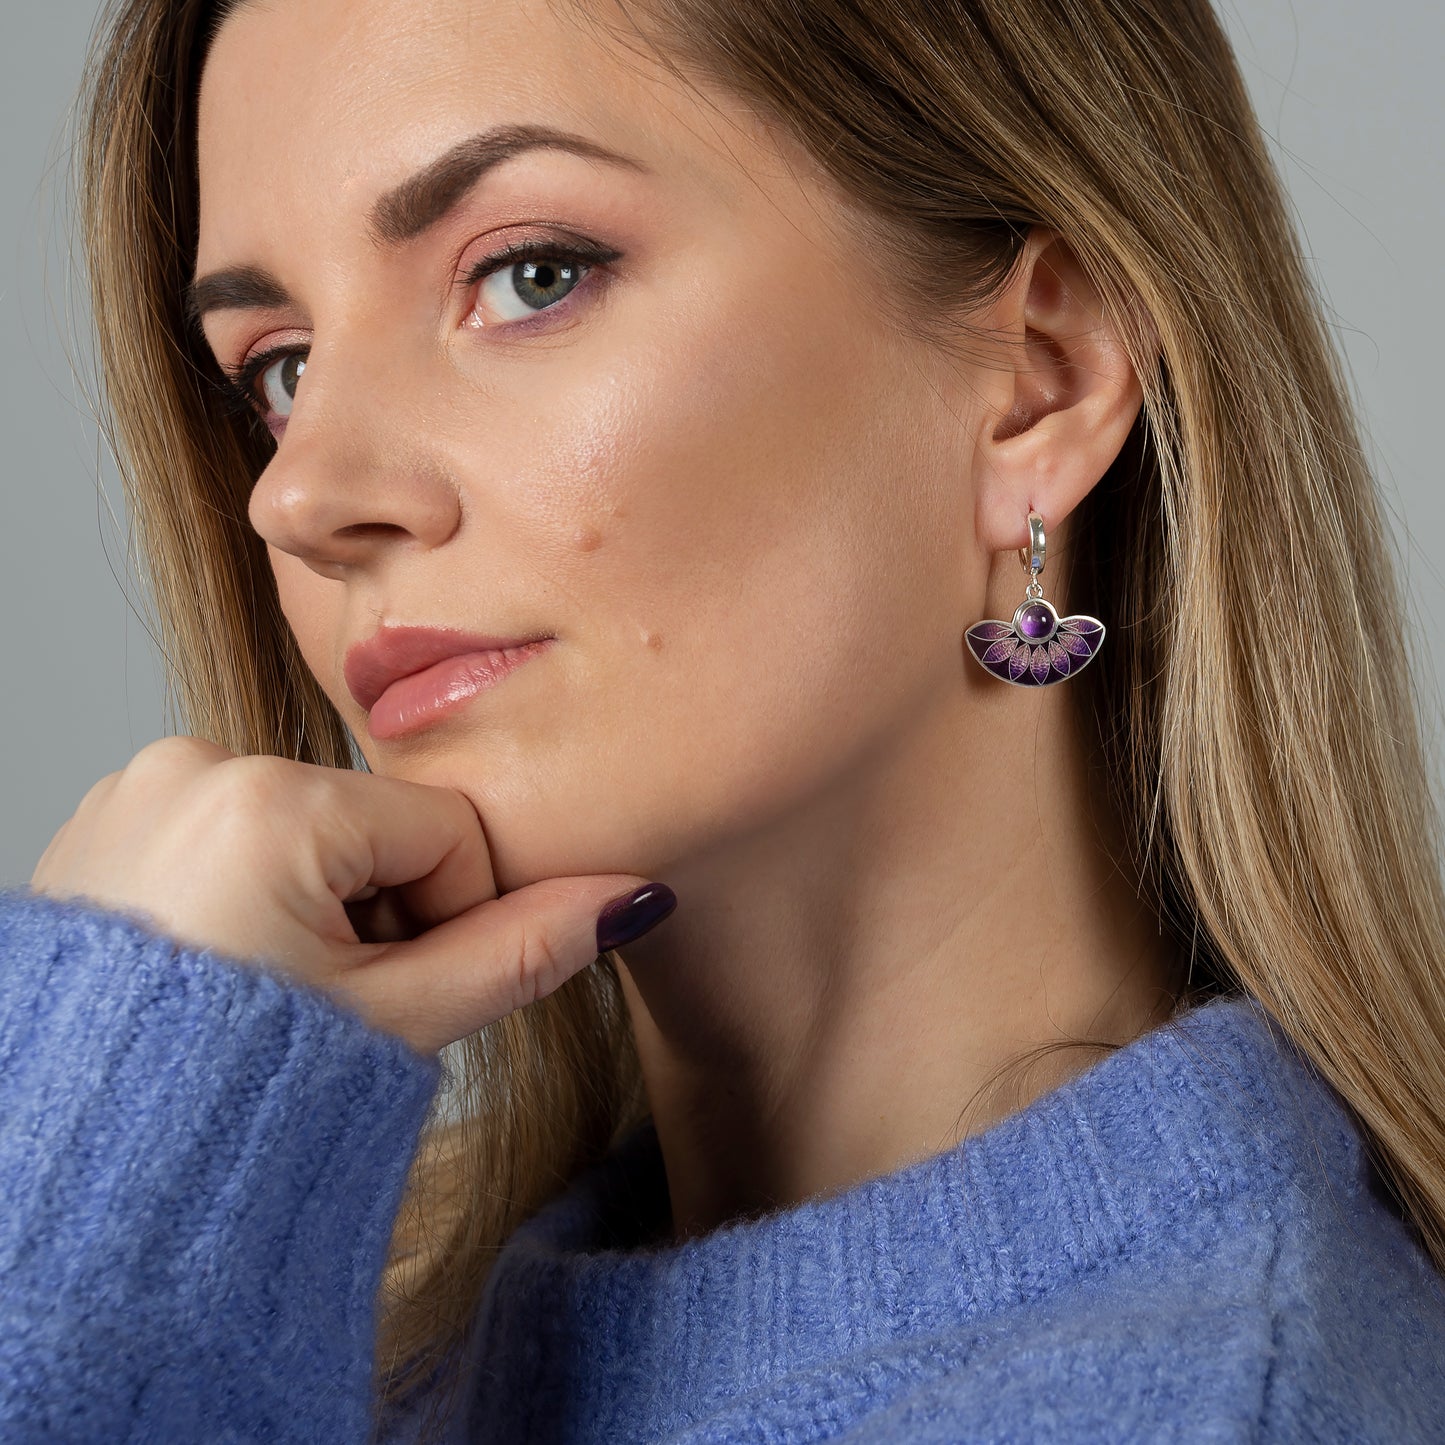 Purple Leaves Semicircle Cloisonné Enamel Earrings with Amethyst Stone